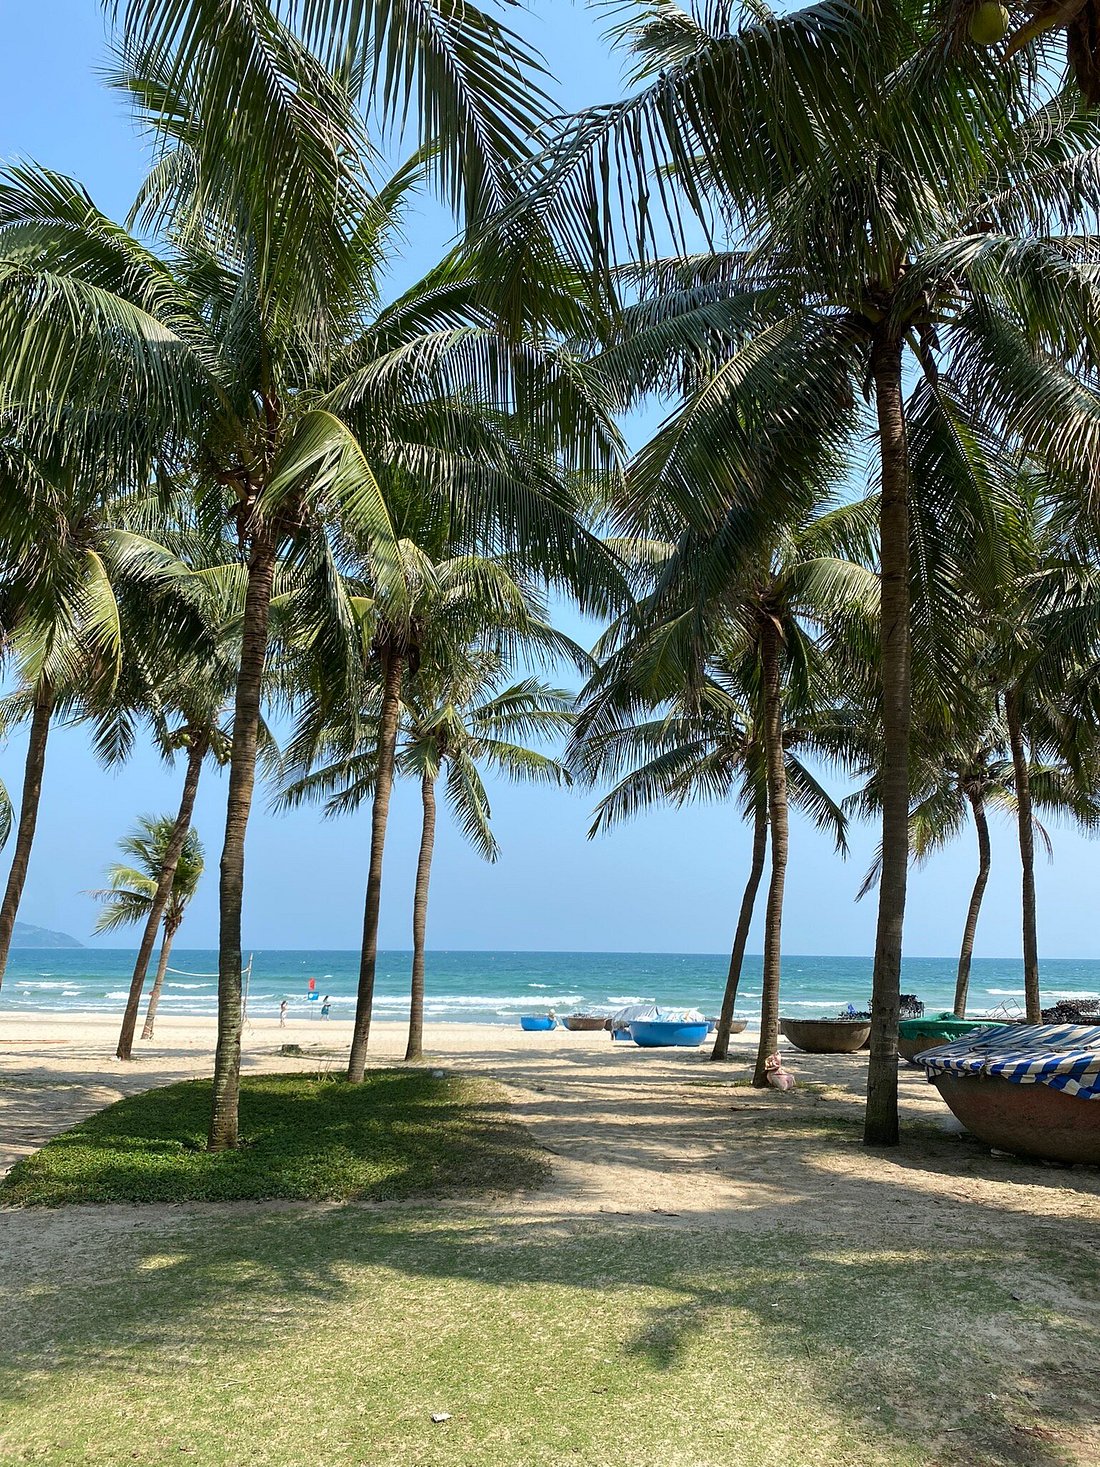 two vietnam beaches among top 10 in asia: tripadvisor